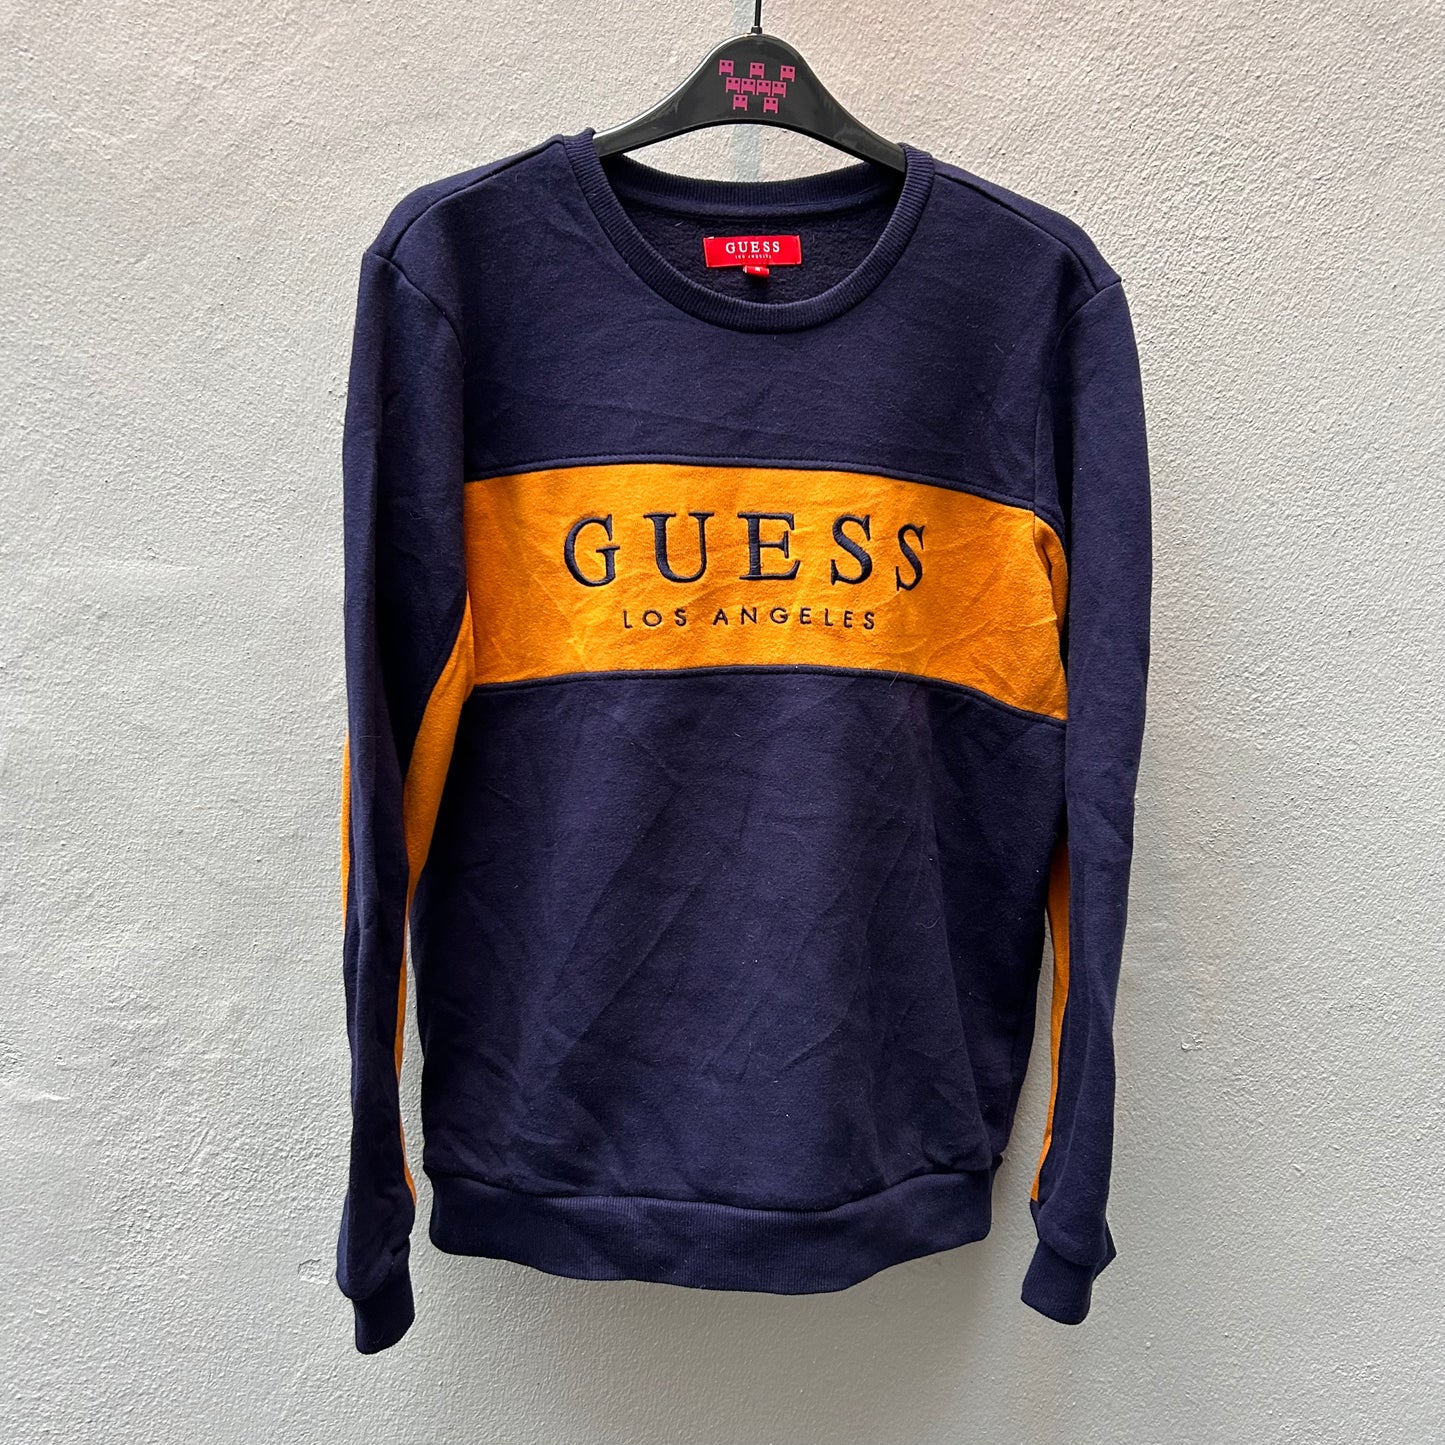 Guess Los Angeles Sweatshirt